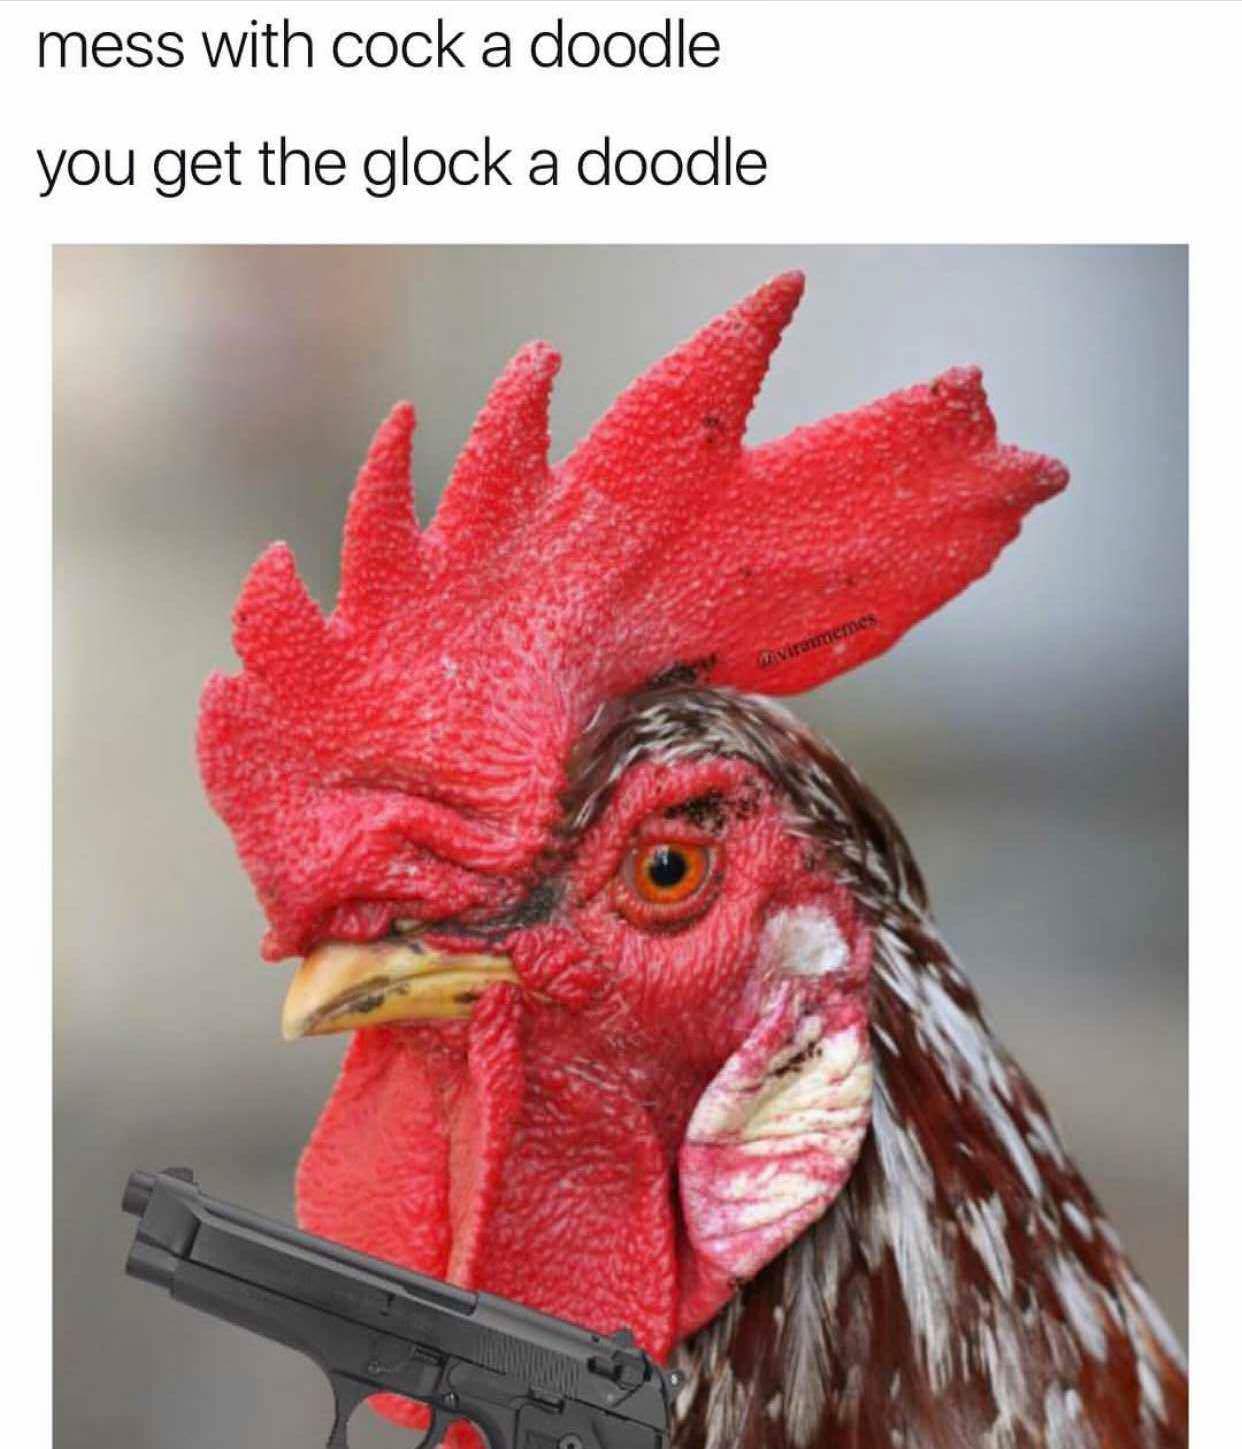 glock a doodle meme - mess with cock a doodle you get the glock a doodle Virtmemes